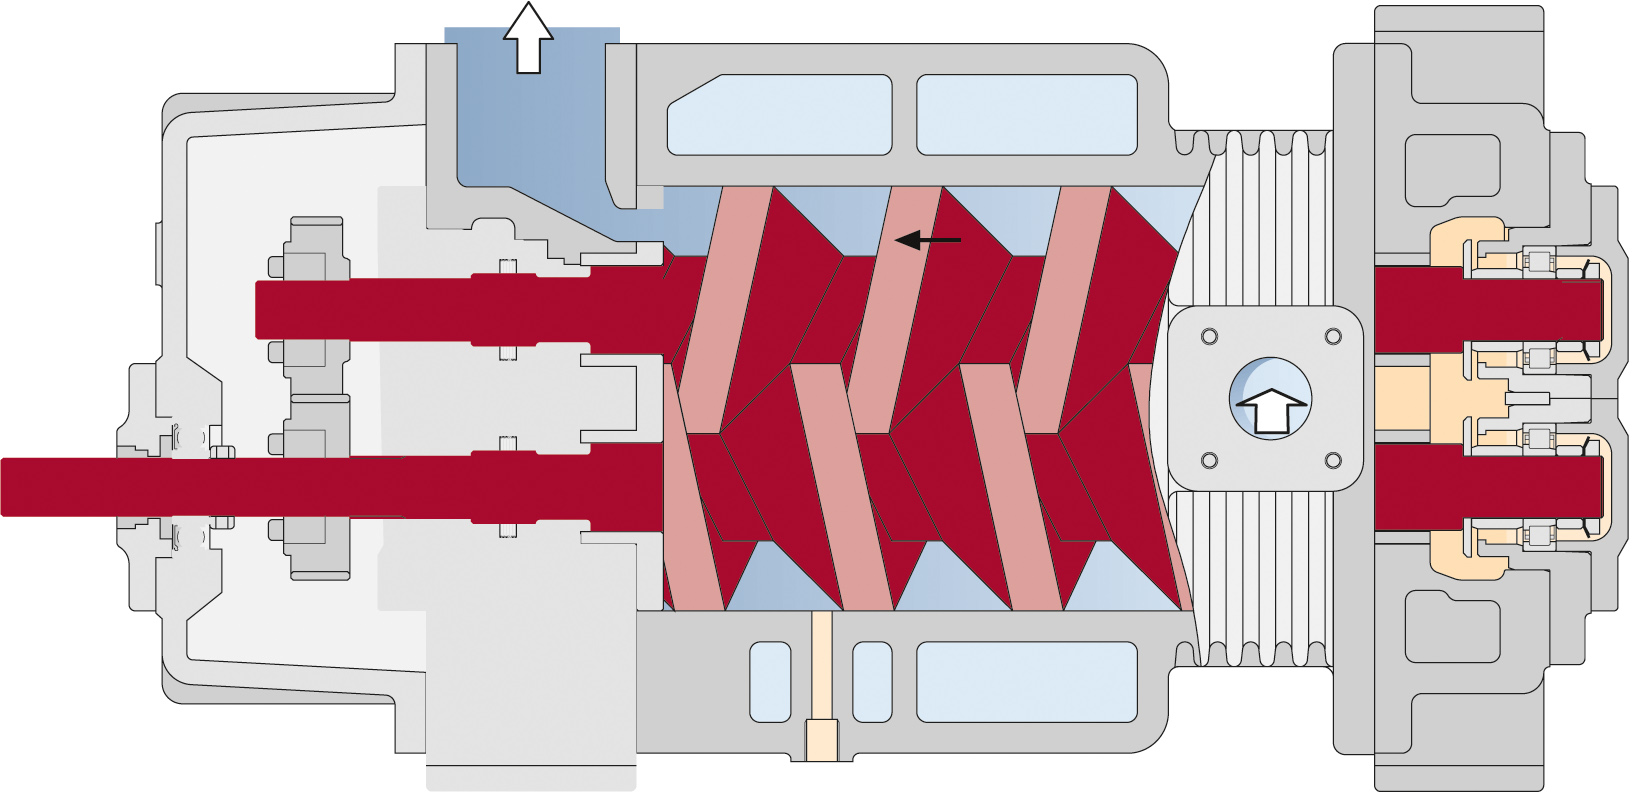 Screw vacuum pump operating principles cut section model